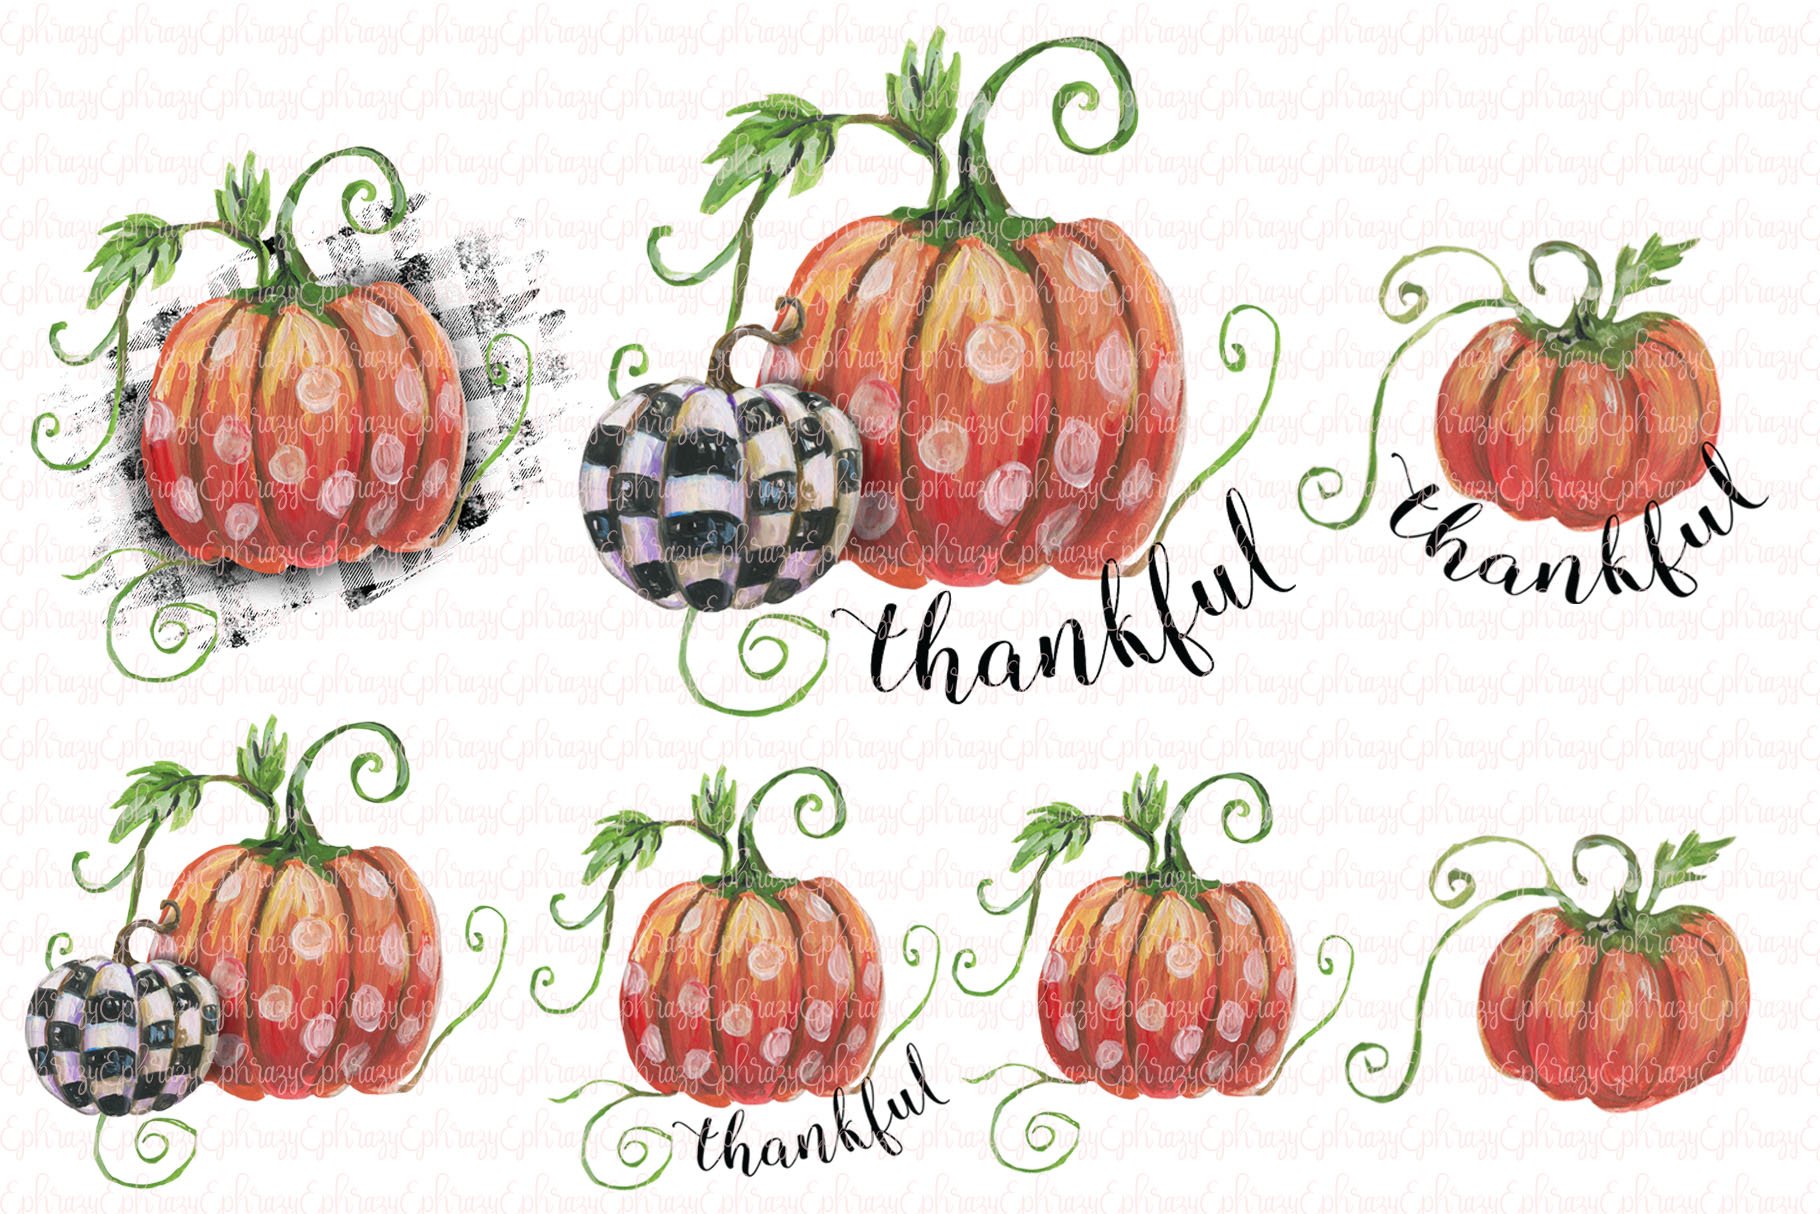 Magic pumpkins collection for a warm autumn illustration.